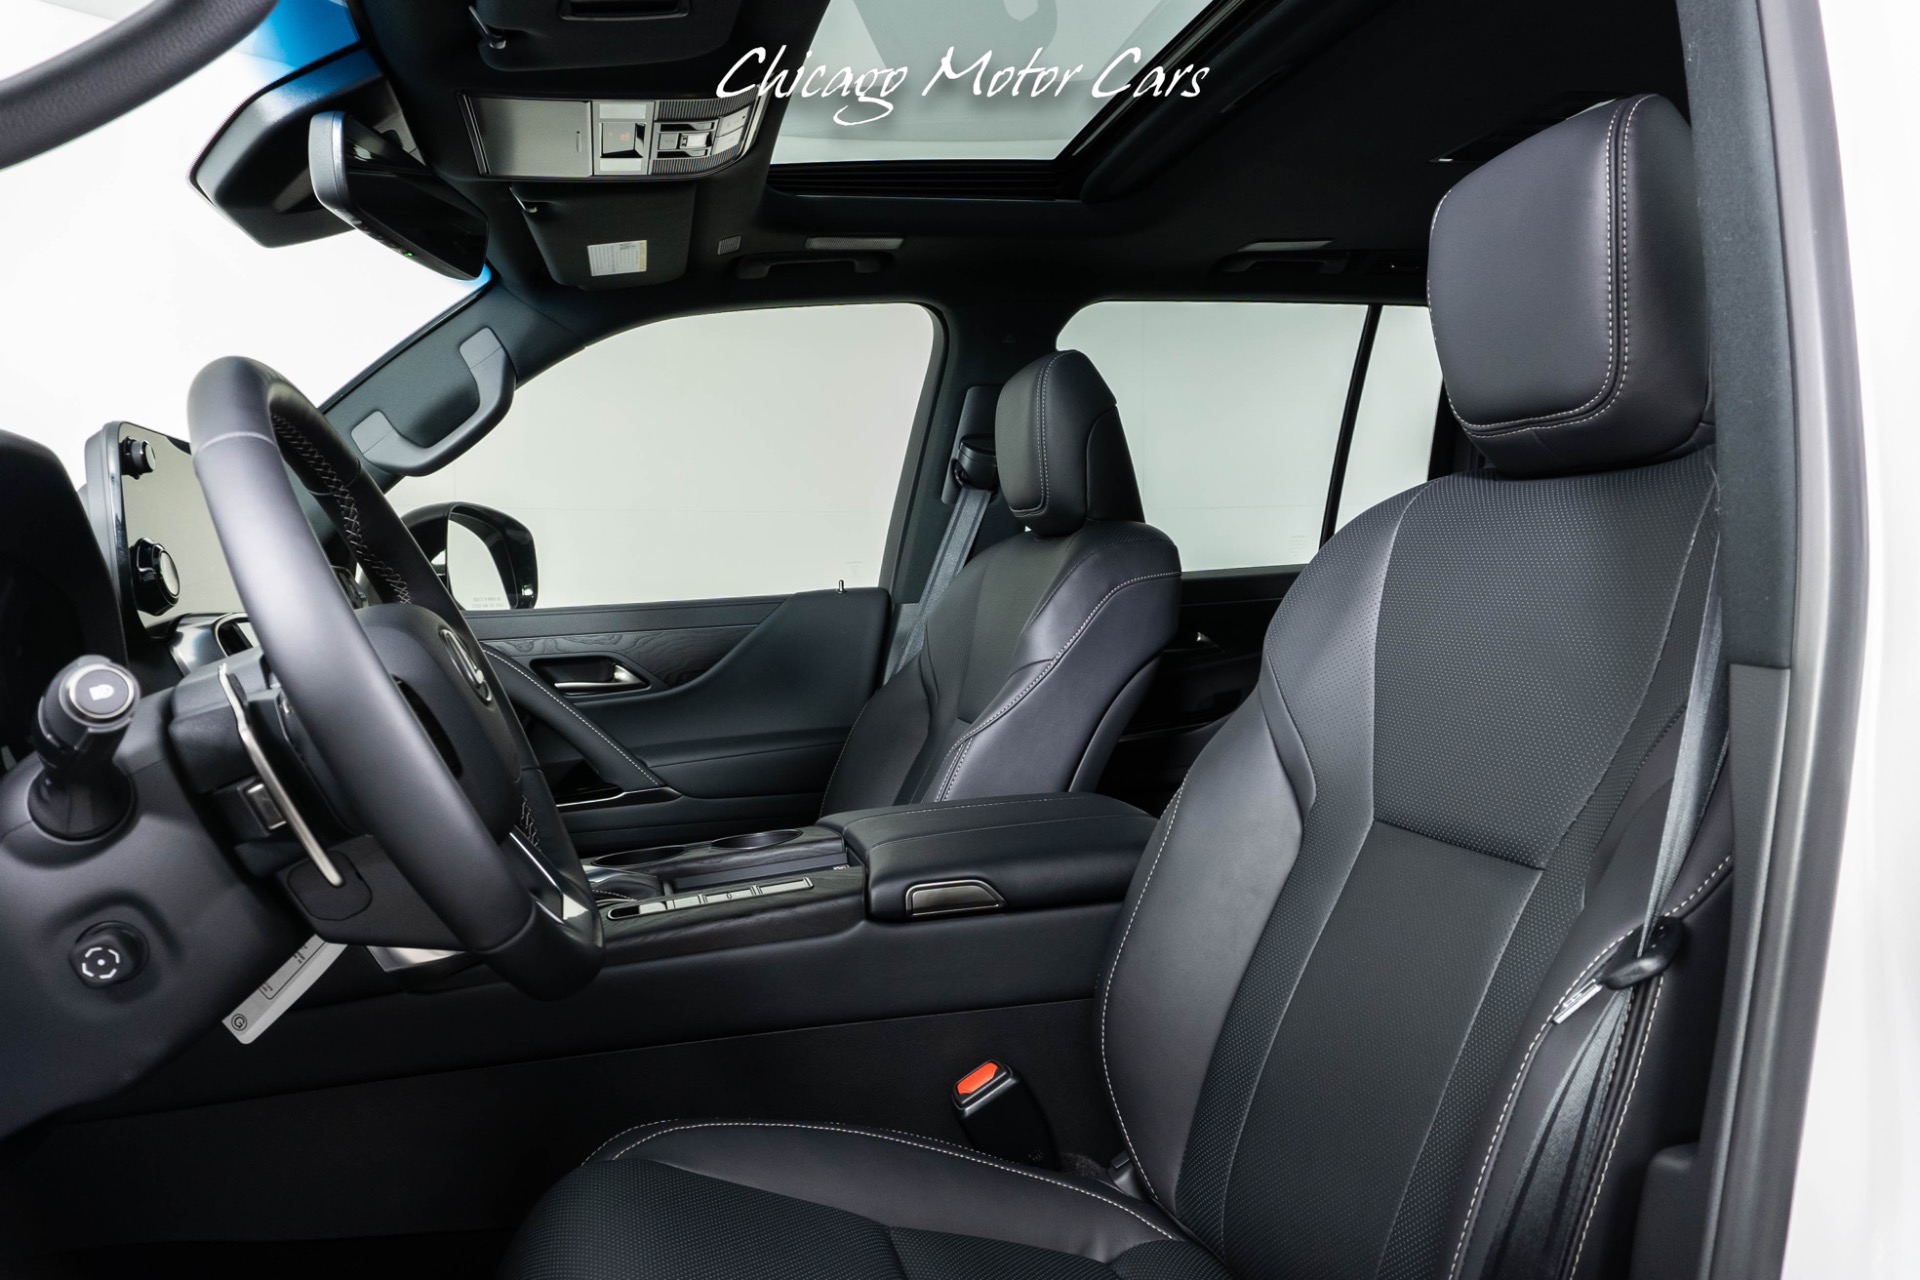 Used-2022-Lexus-LX600-Premium-Power-Moonroof-Premium-Package-Only-240-Miles-Loaded